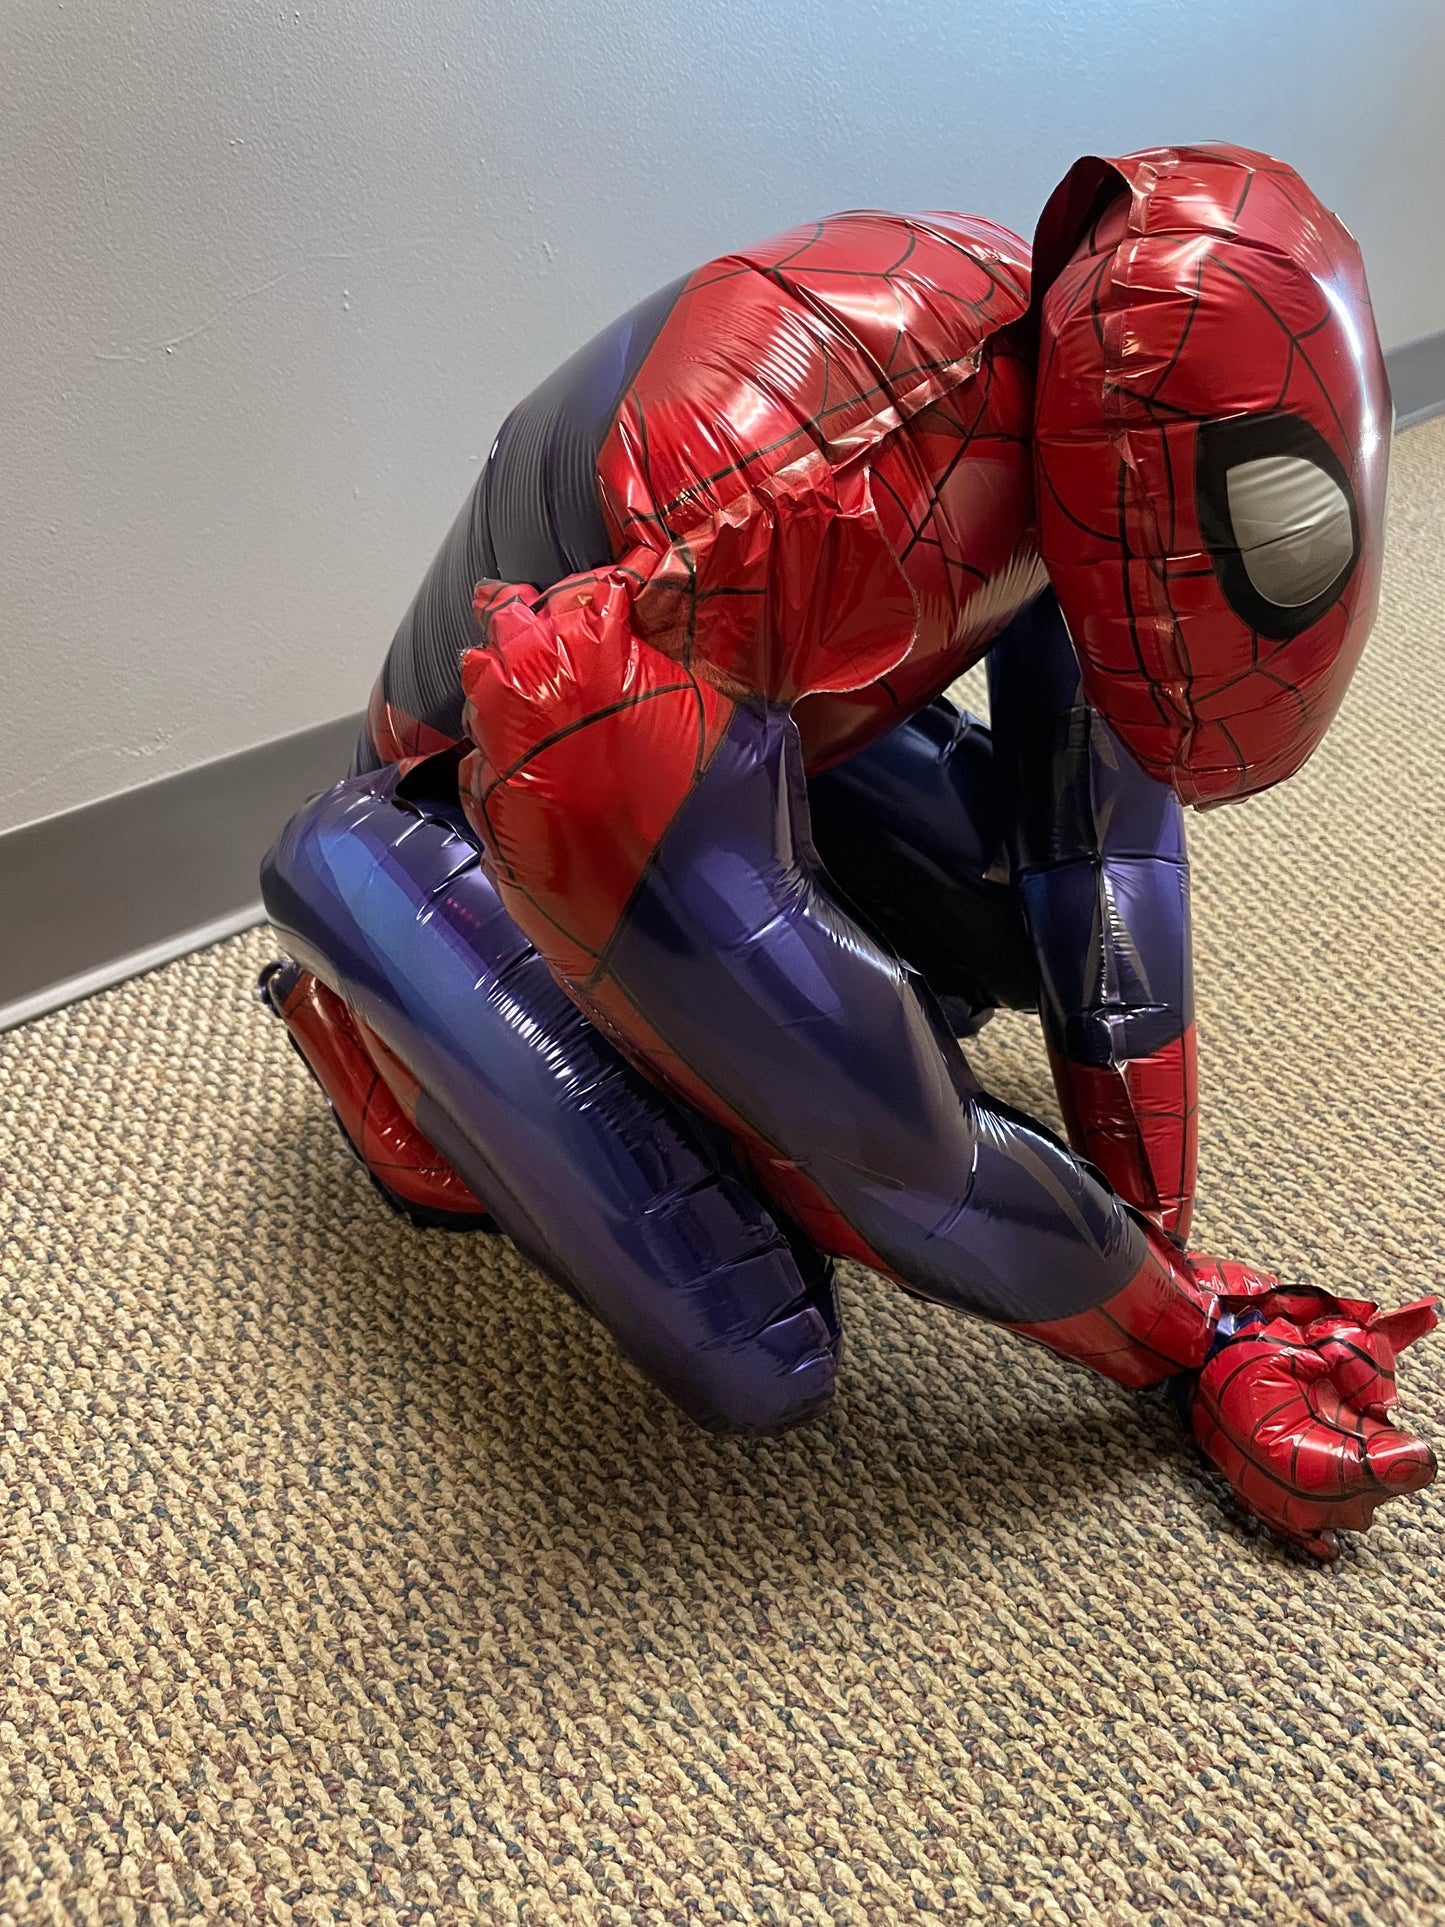 Sitting Spiderman